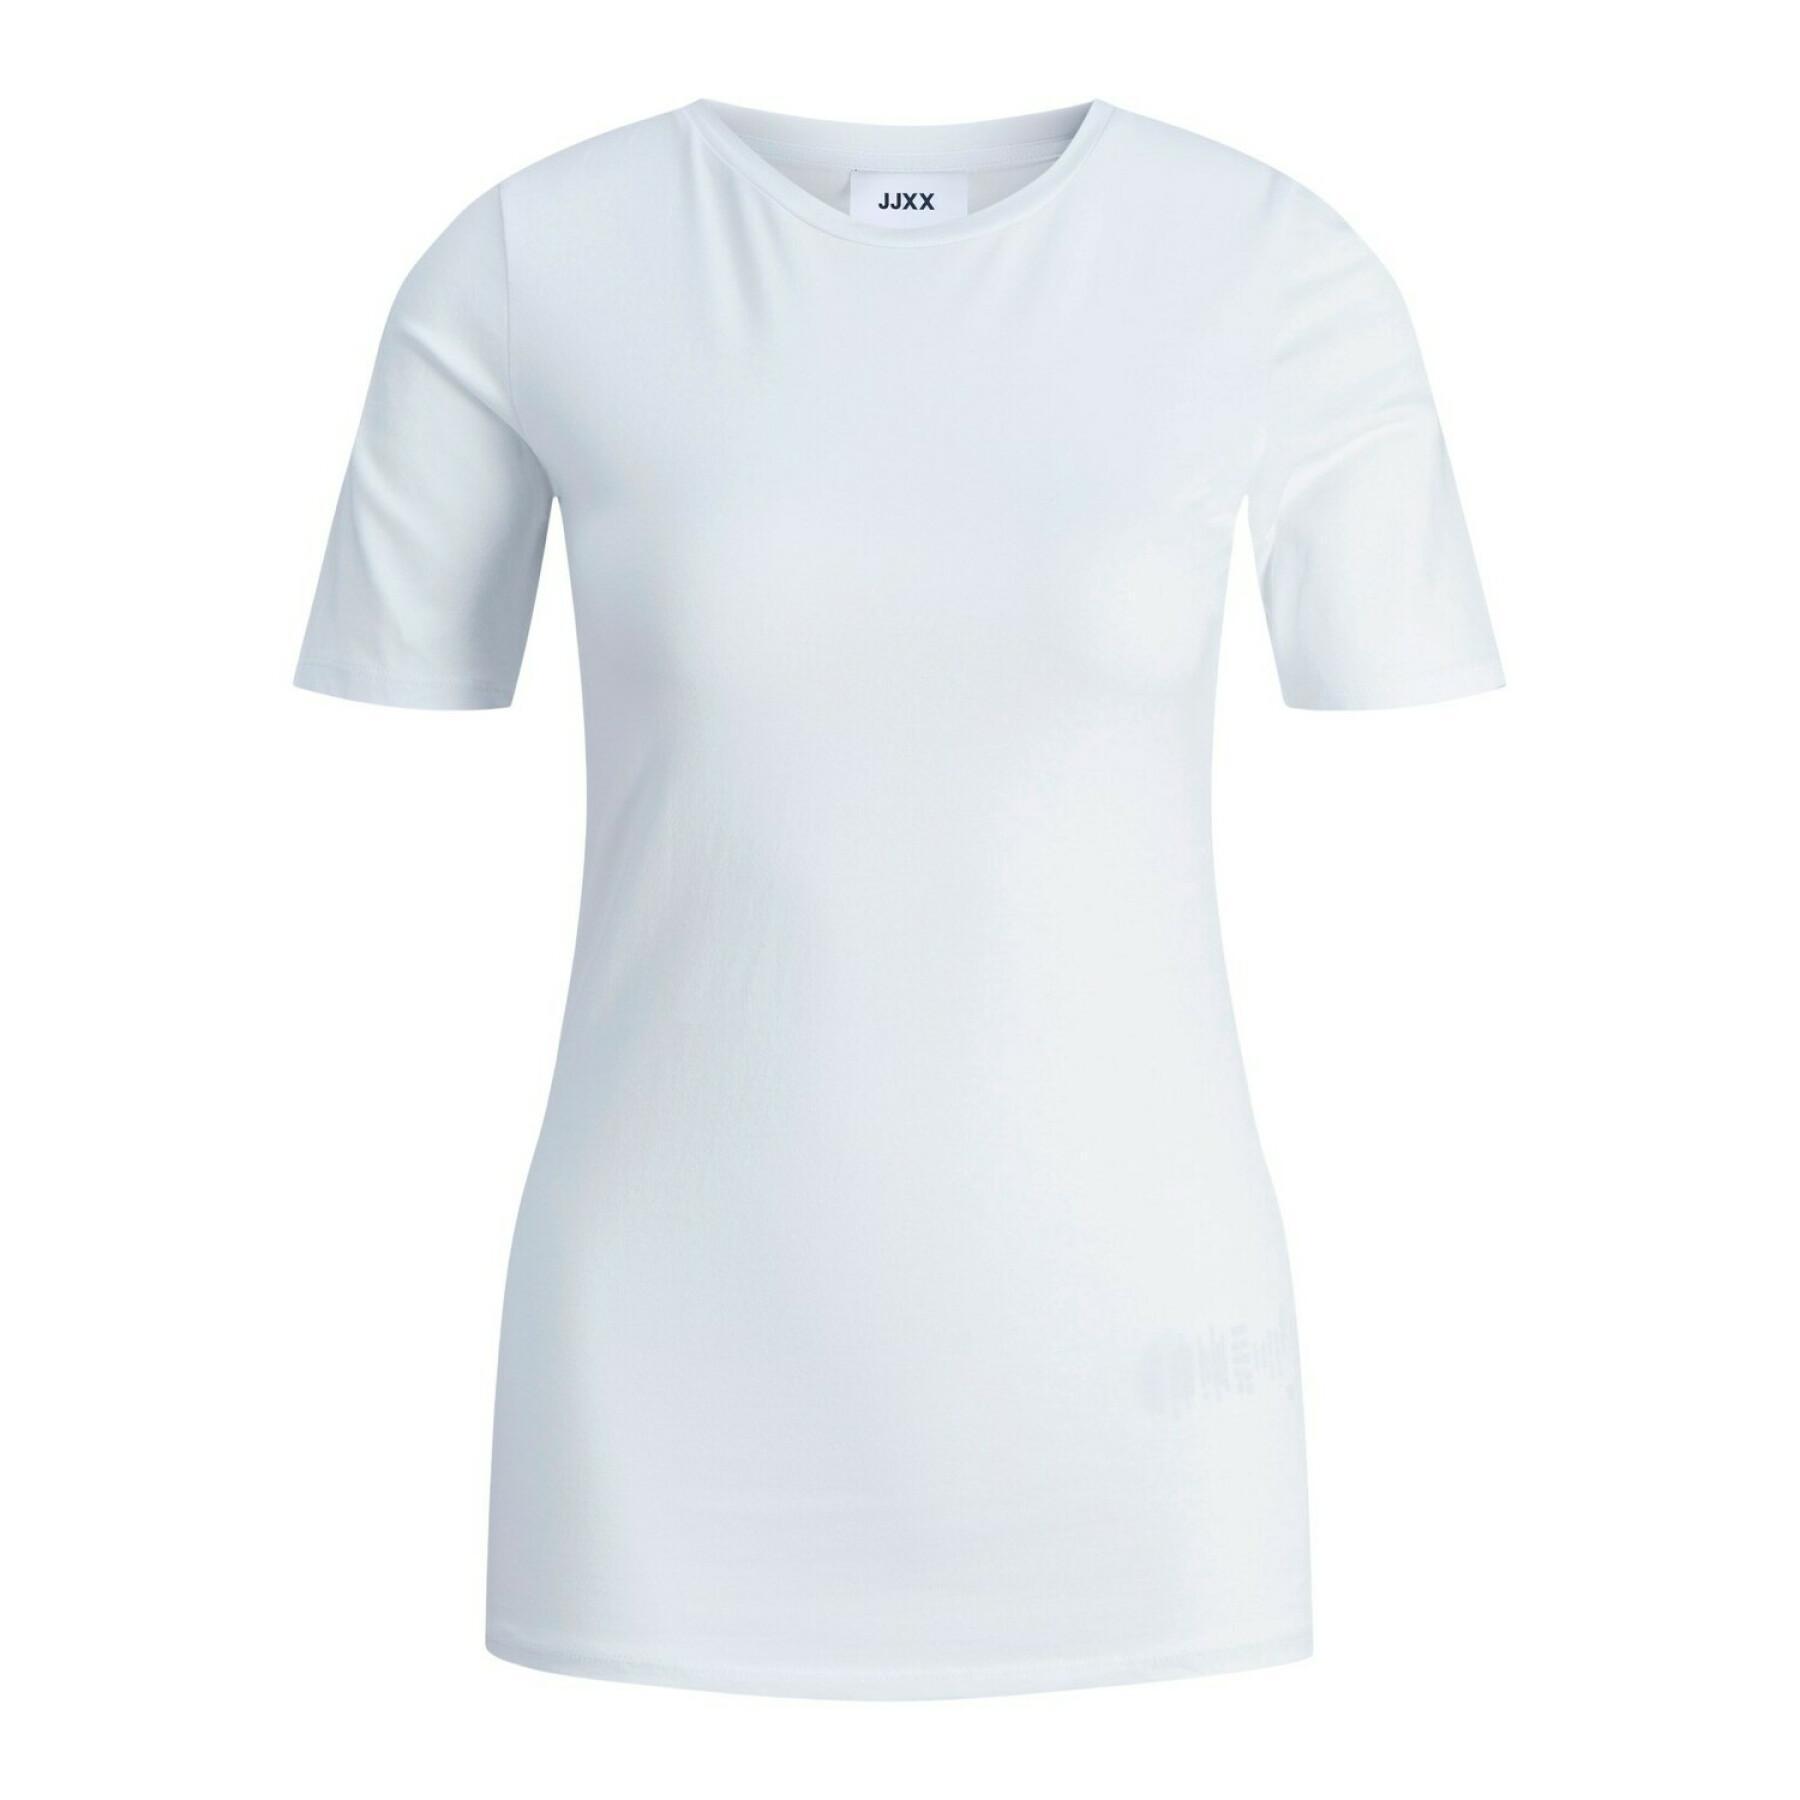 Women's T-shirt JJXX evelin pima